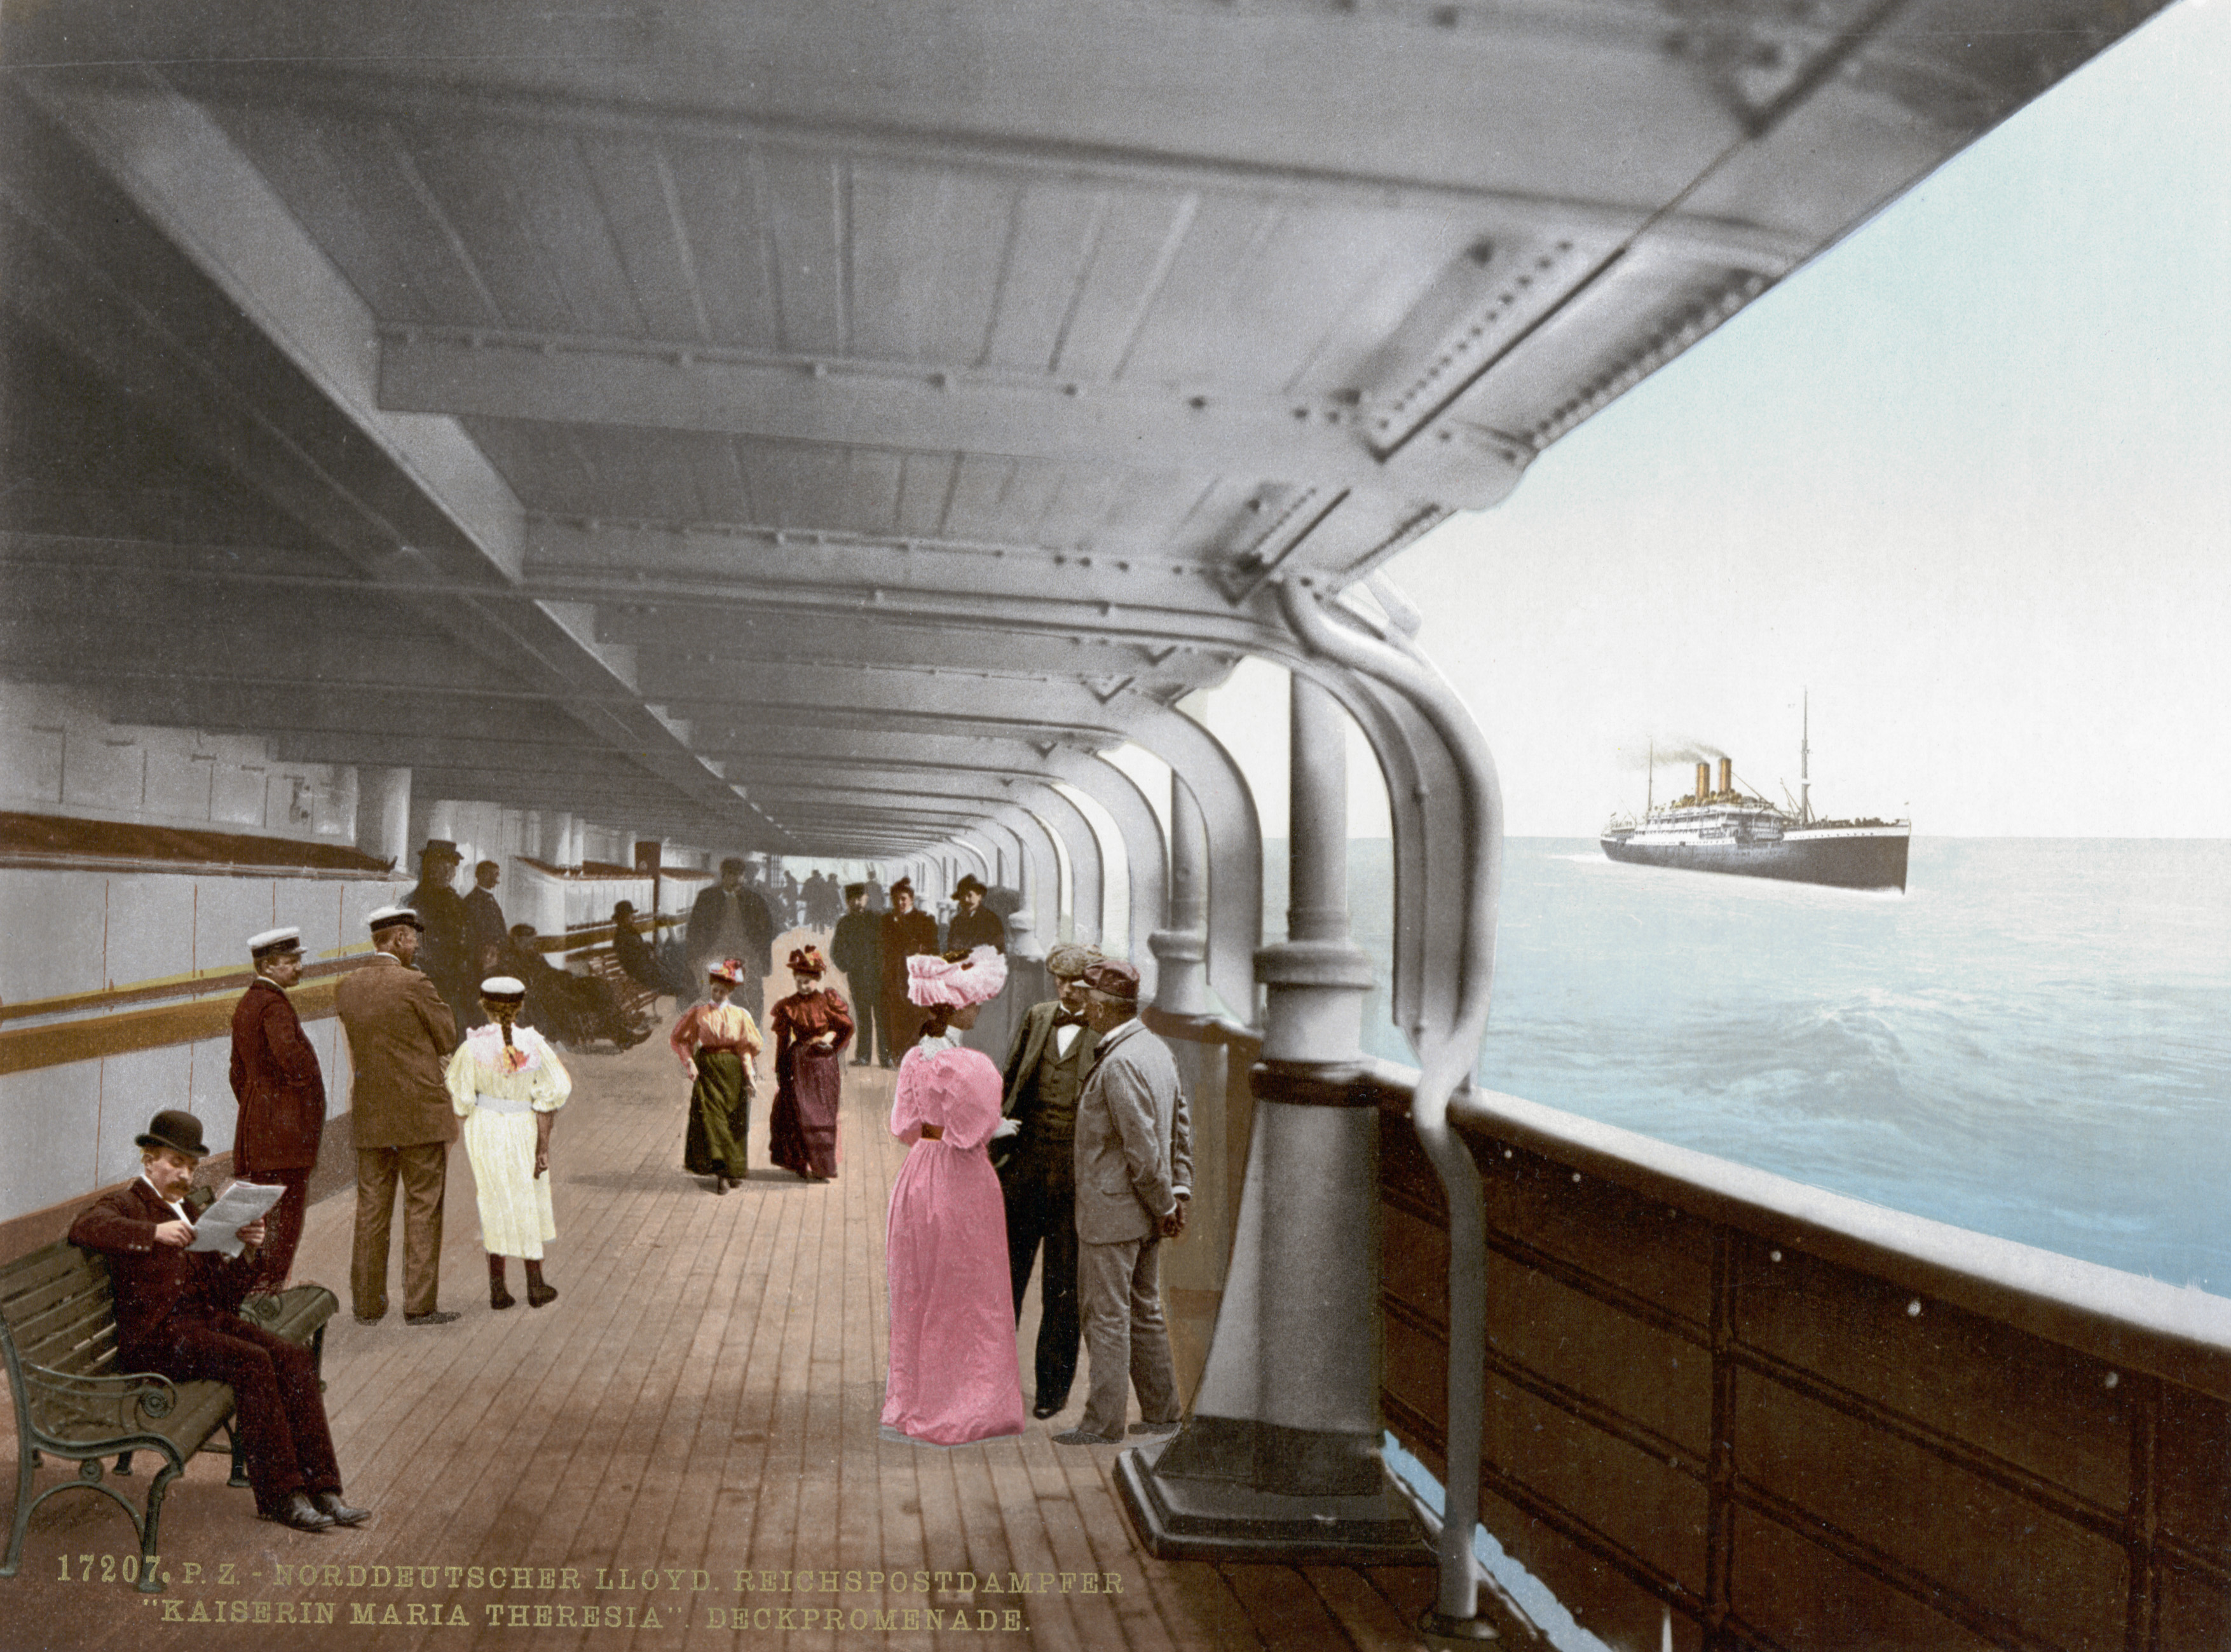 Kaiserin Maria Theresia promenade deck